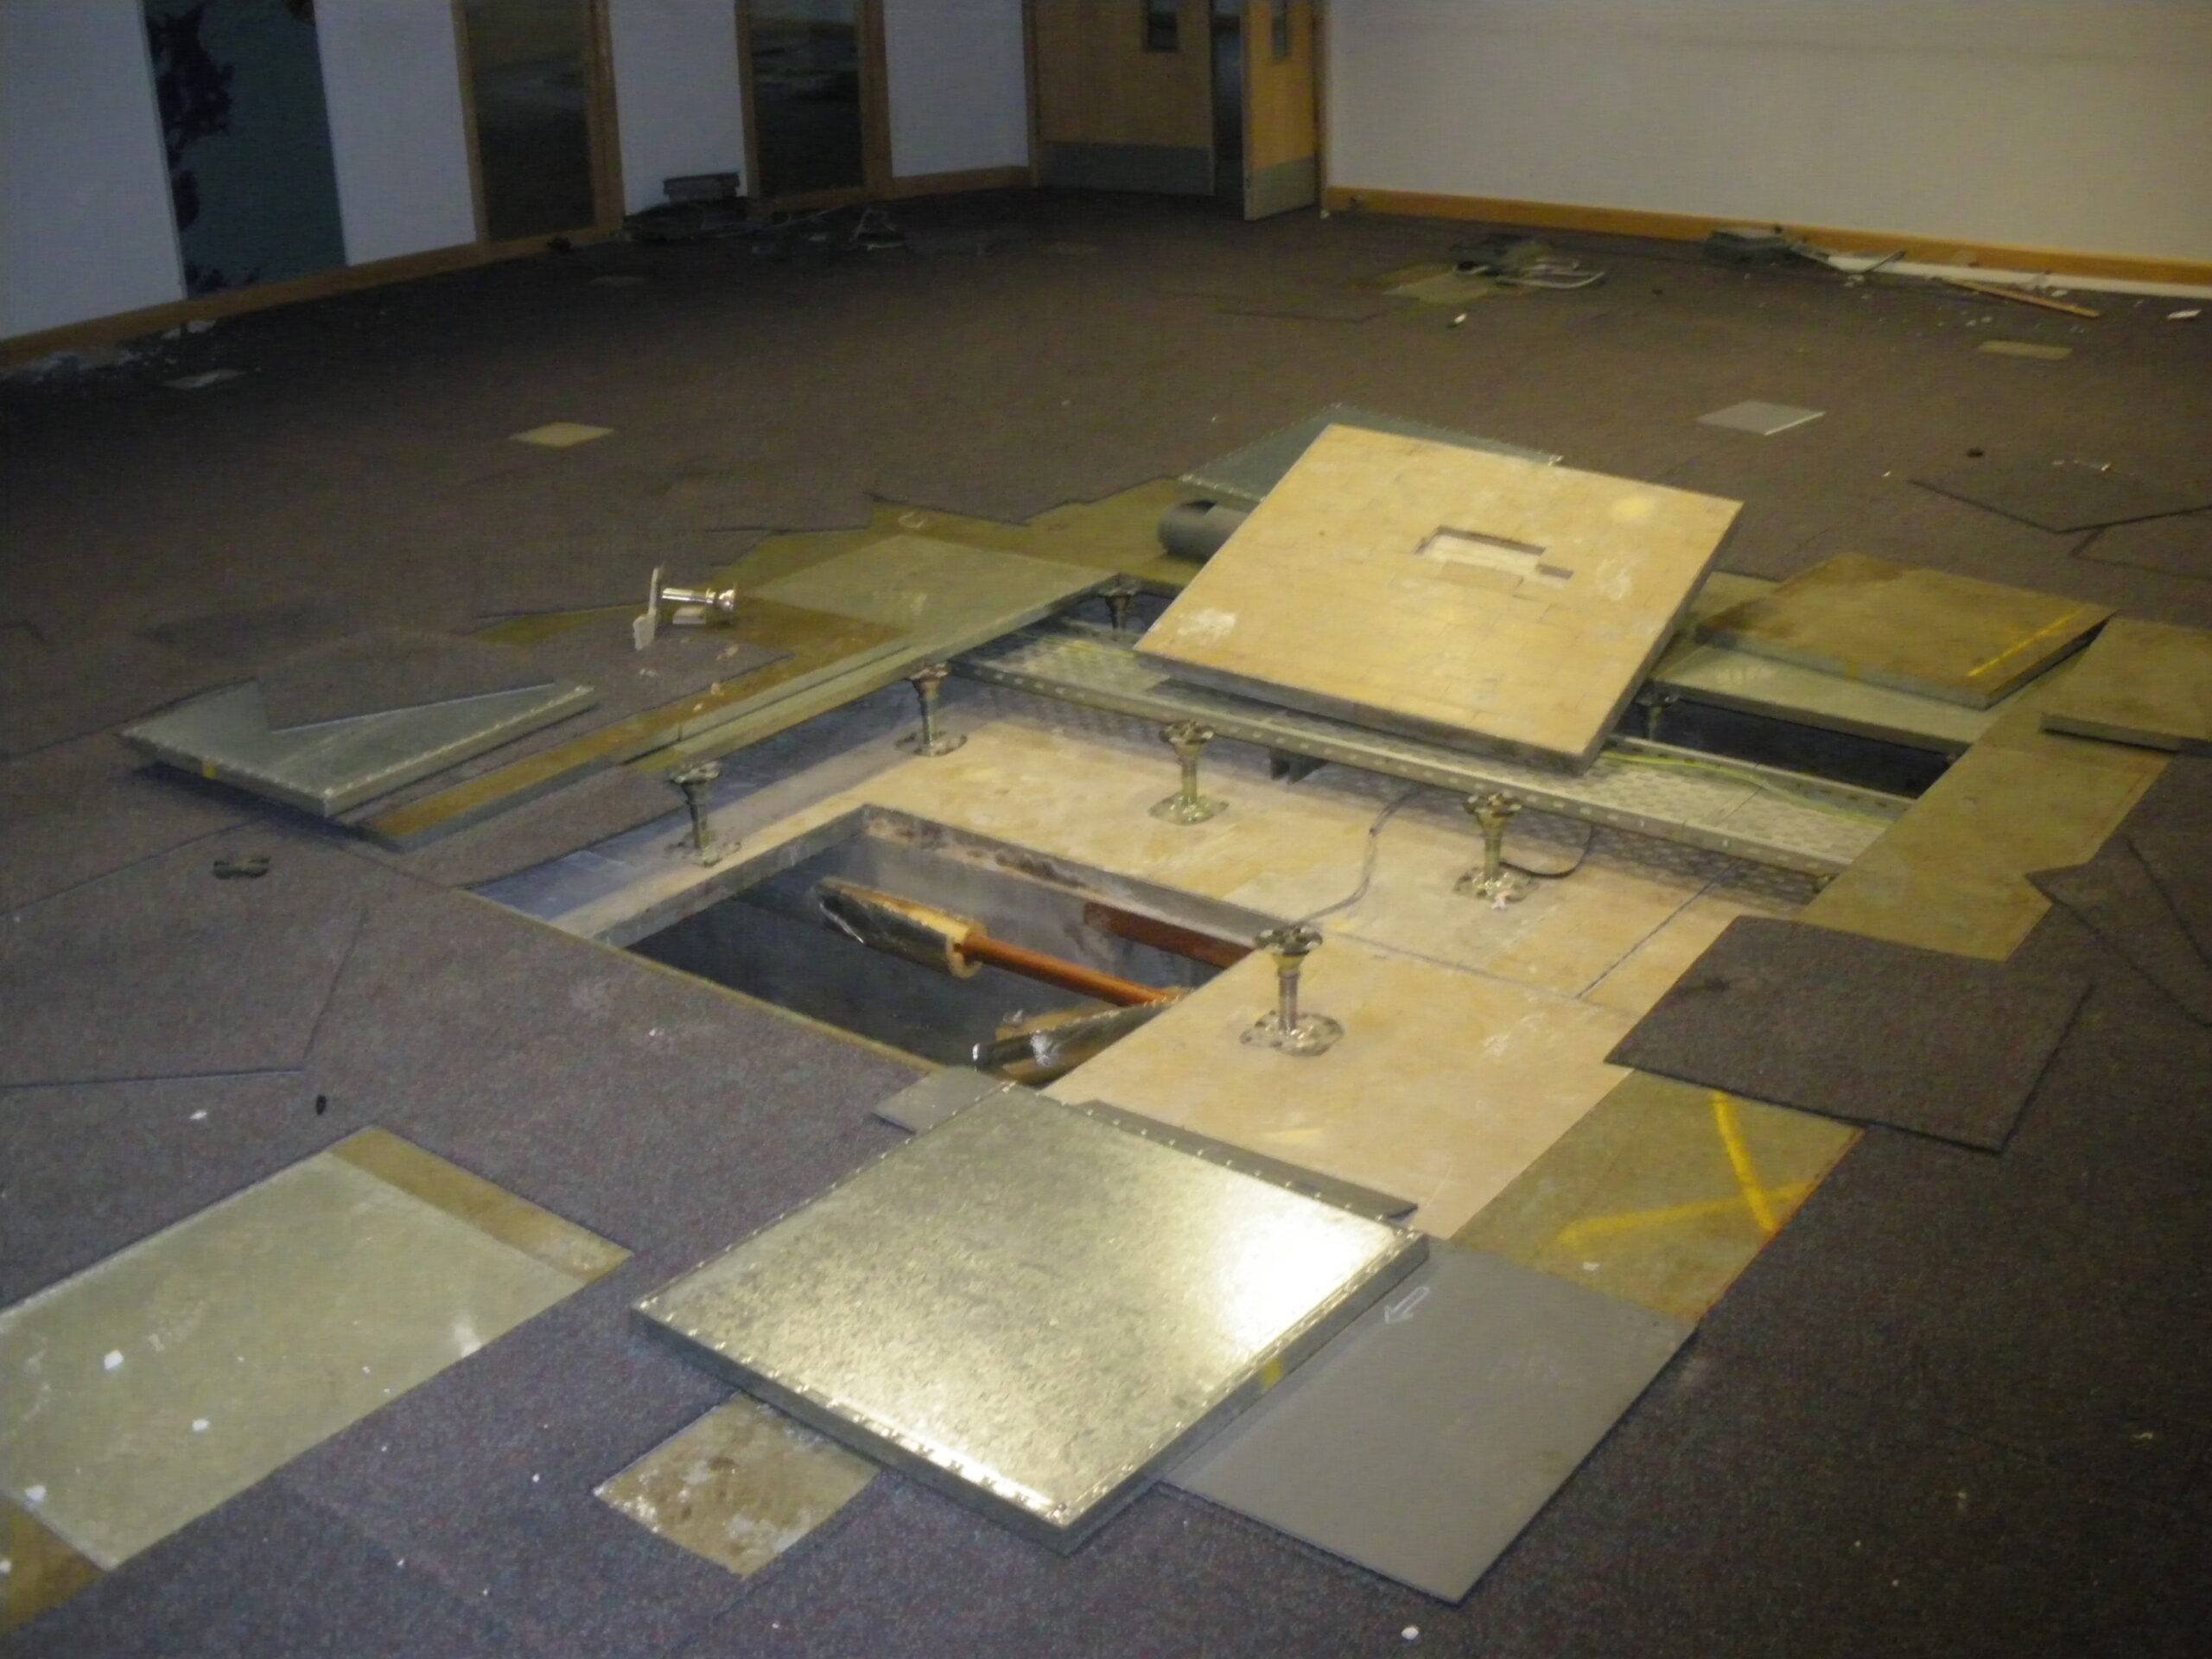 Business Centre's raised floor system, 11 Sep 2011